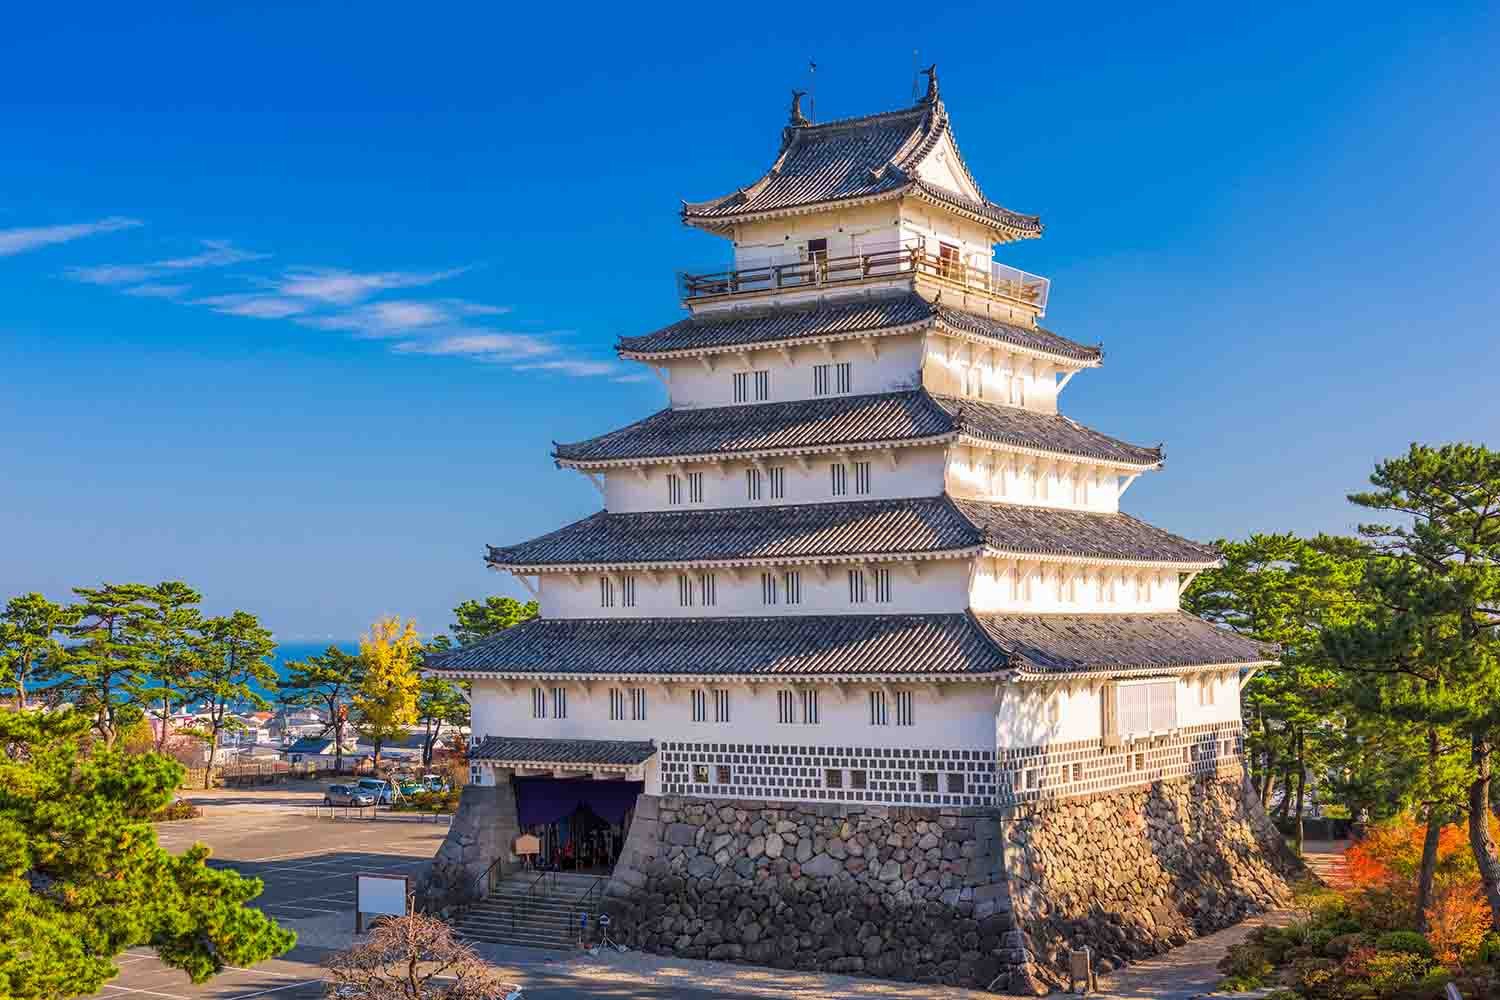 tourhub | YellowWood Adventures | Highlights of Kyushu Island, Japan 